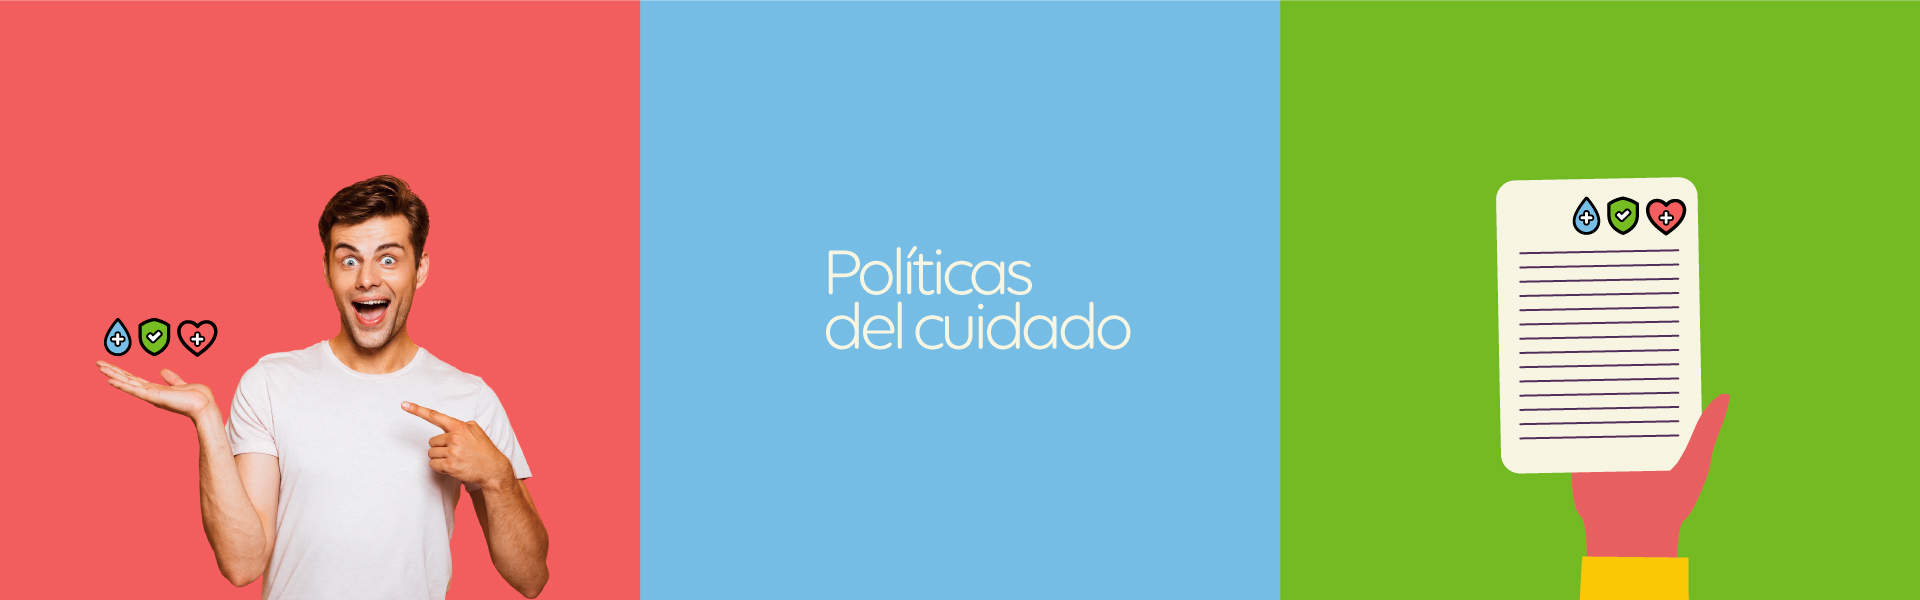 header_EPNC_politicas-1